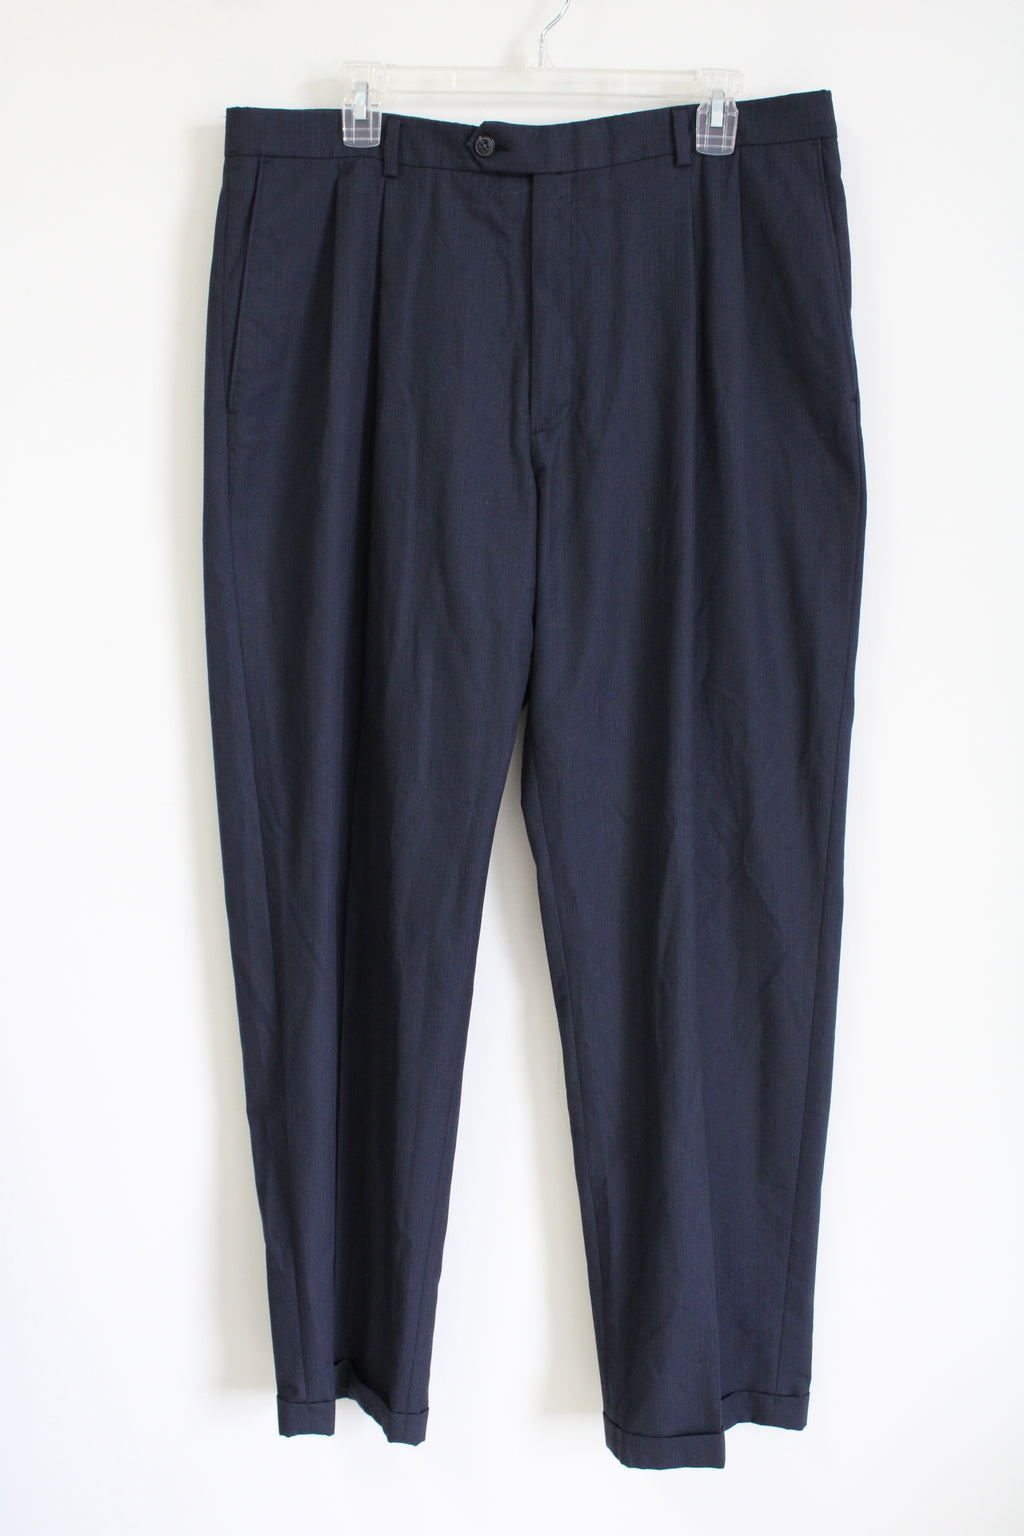 Haggar Navy Blue Dress Pant | 36X32